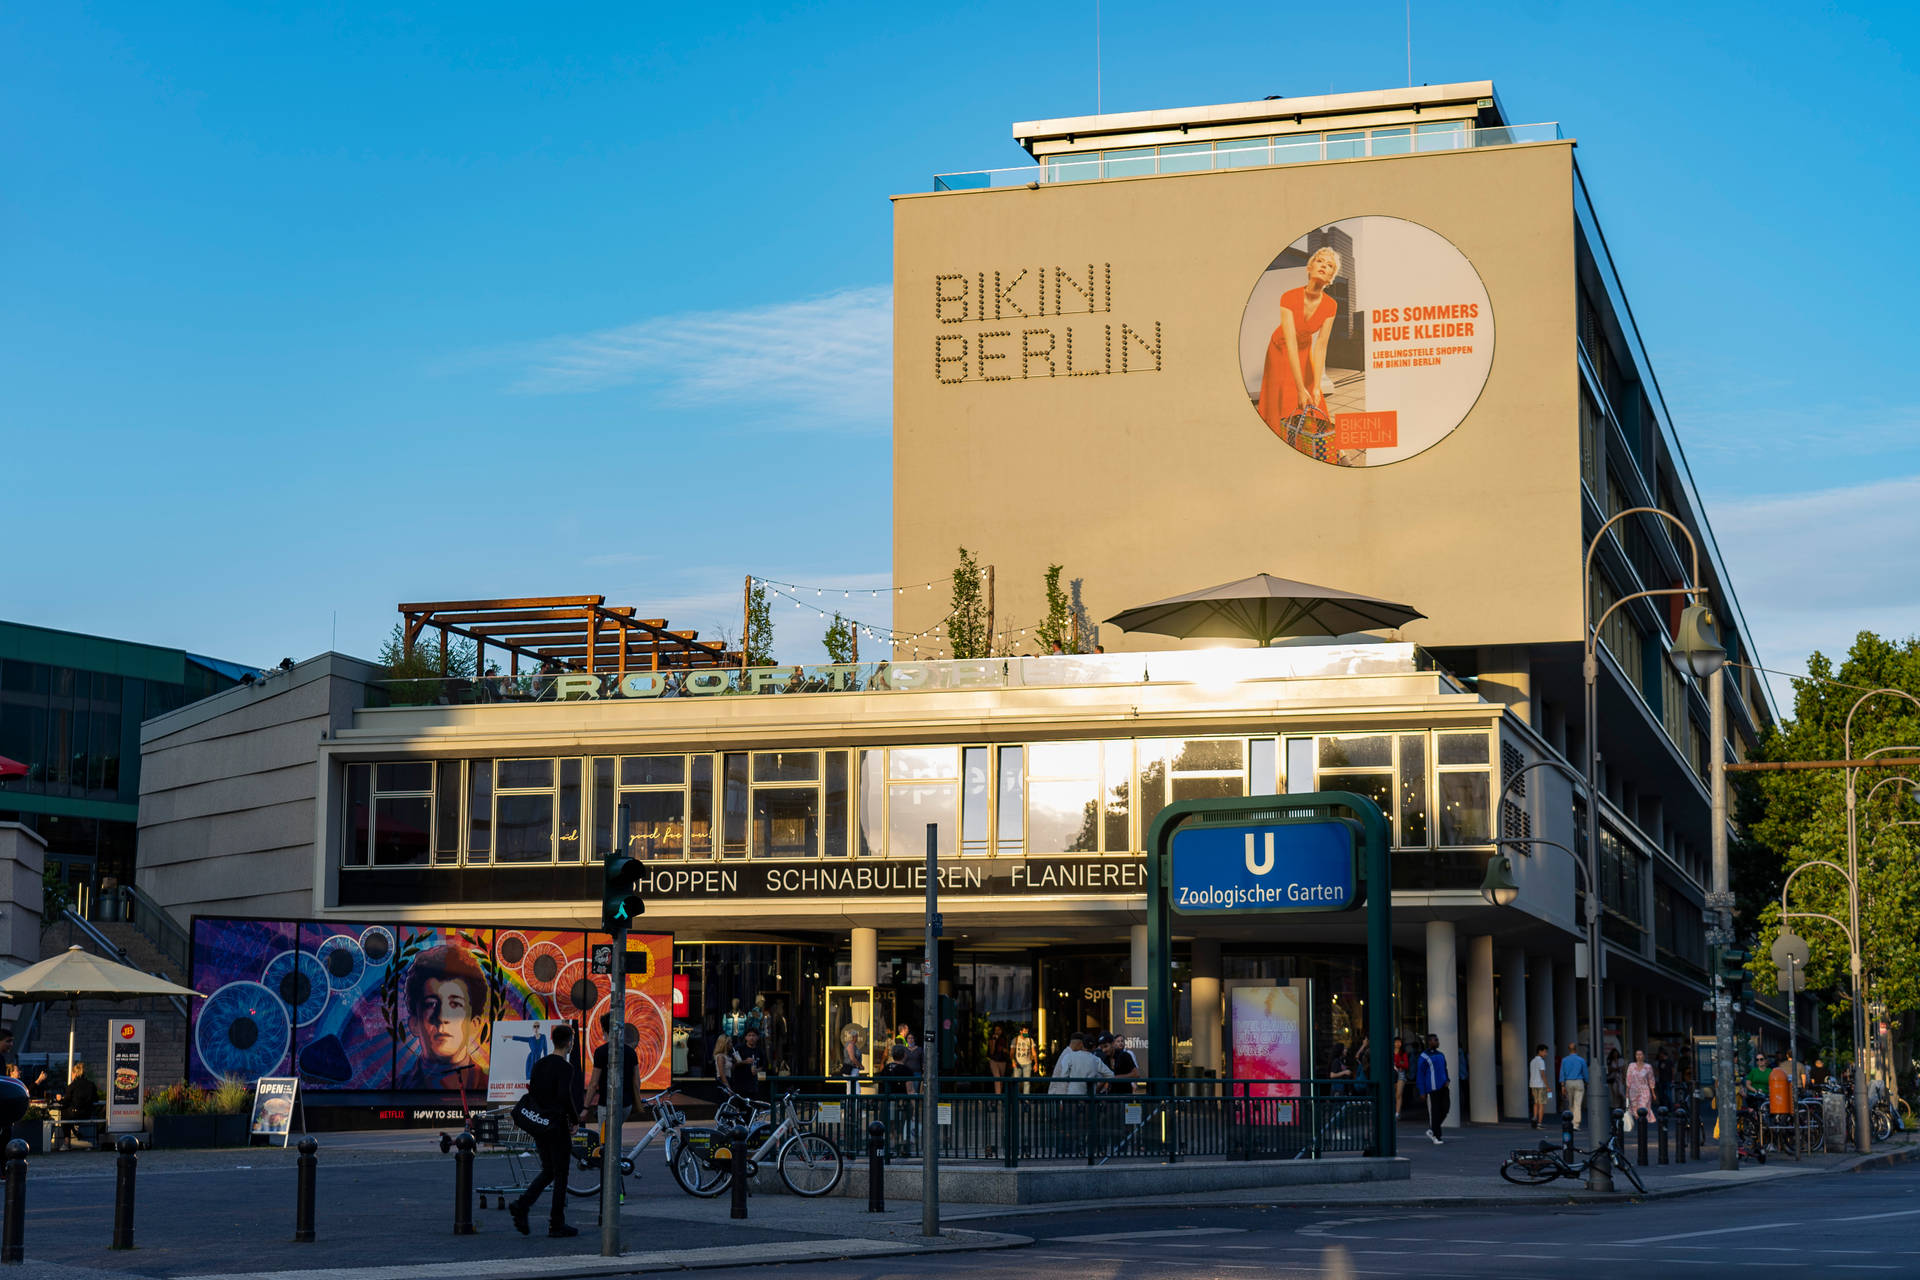 Bikini Berlin Billboard